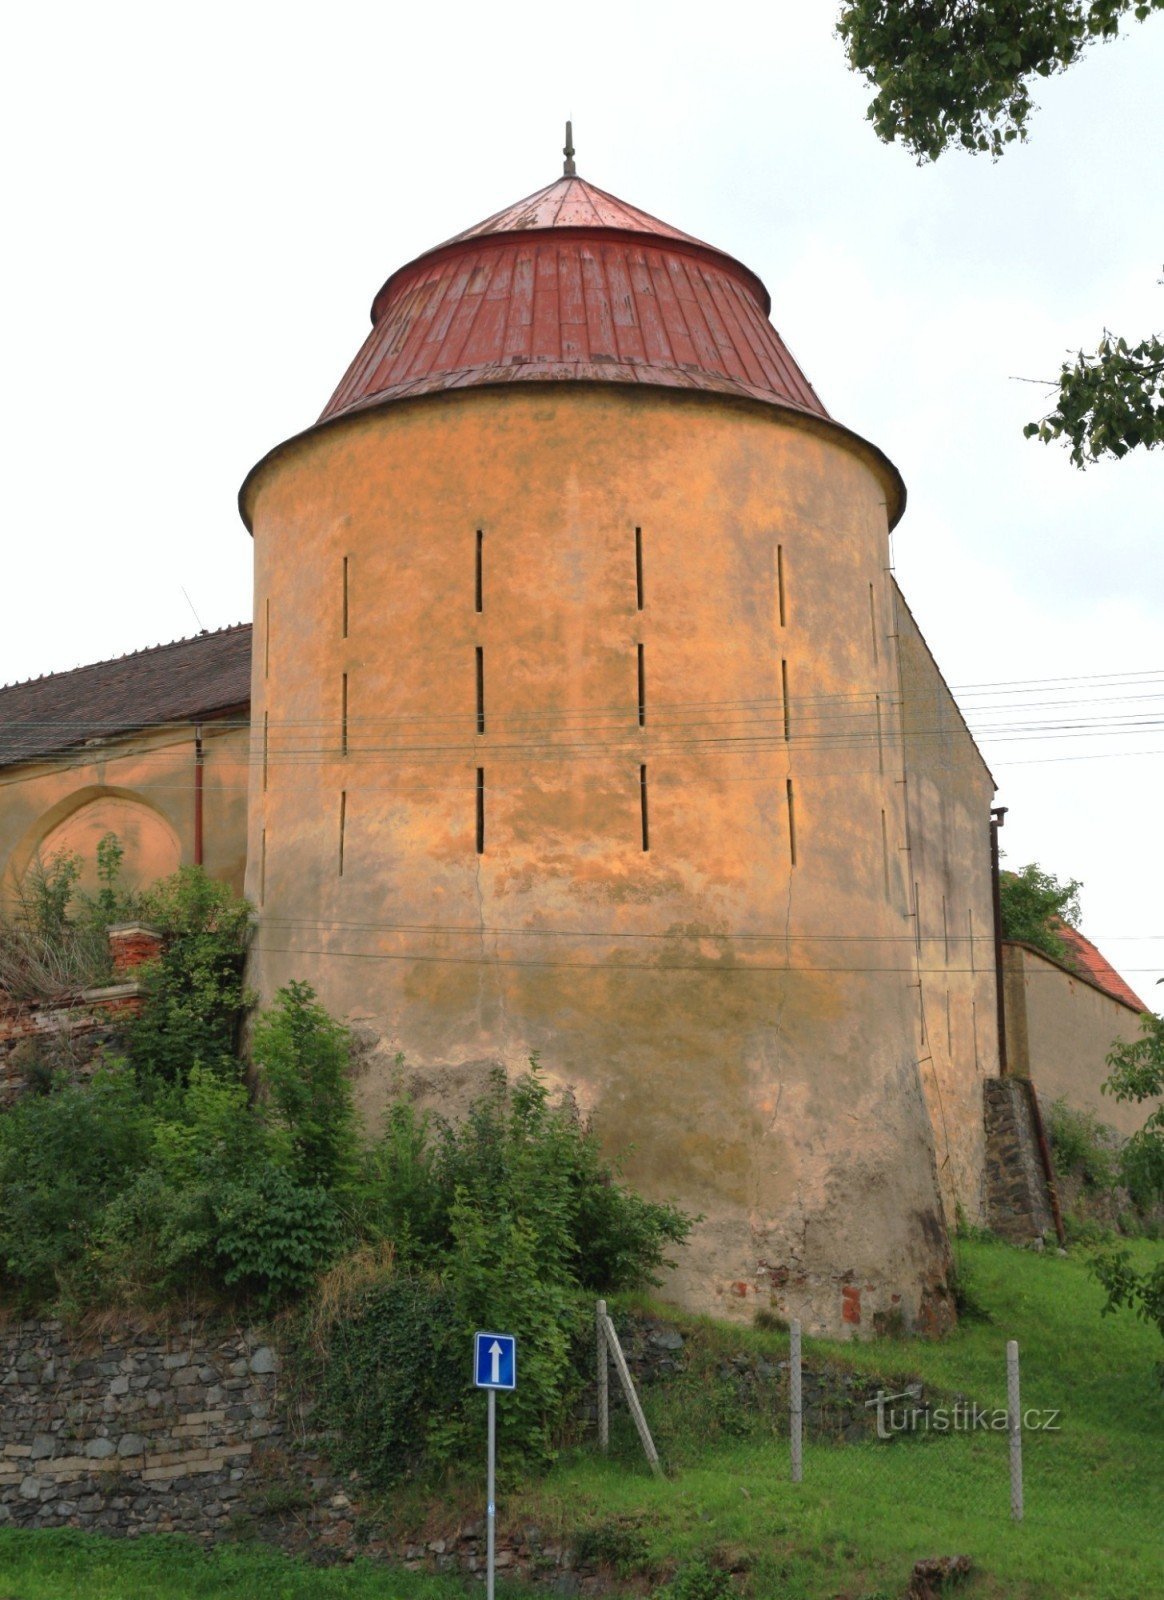 Letovice - bastion castel de colț